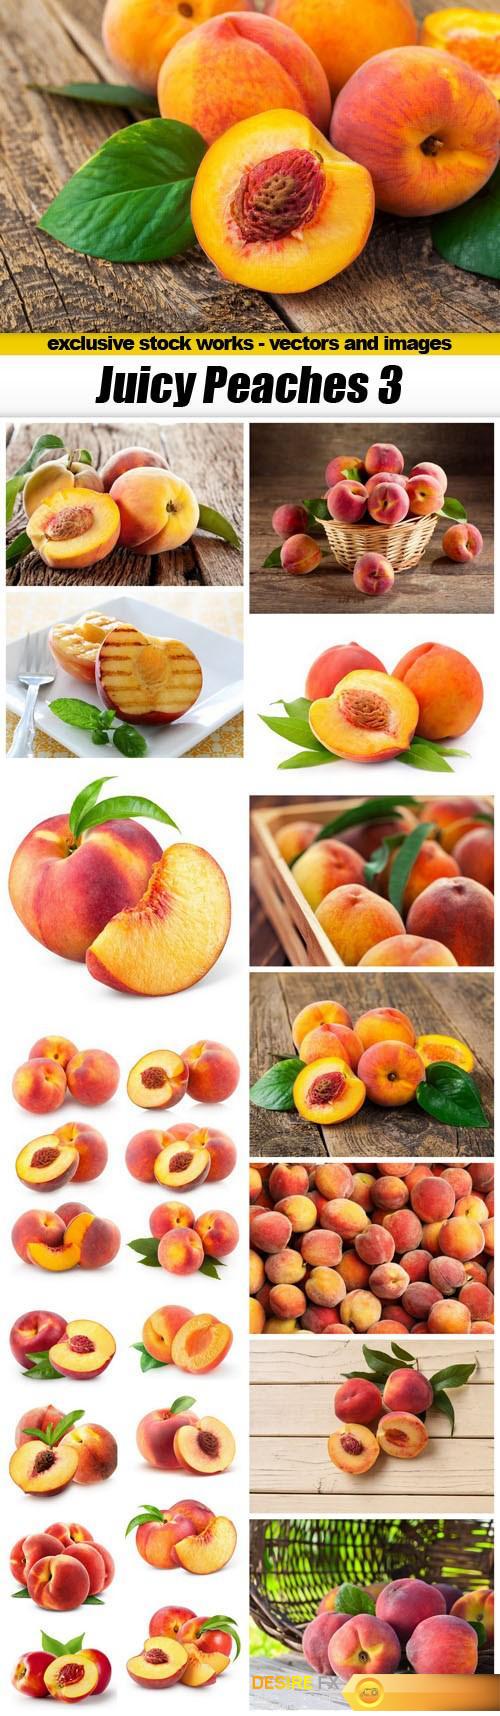 Juicy Peaches 3 - 20xUHQ JPEG